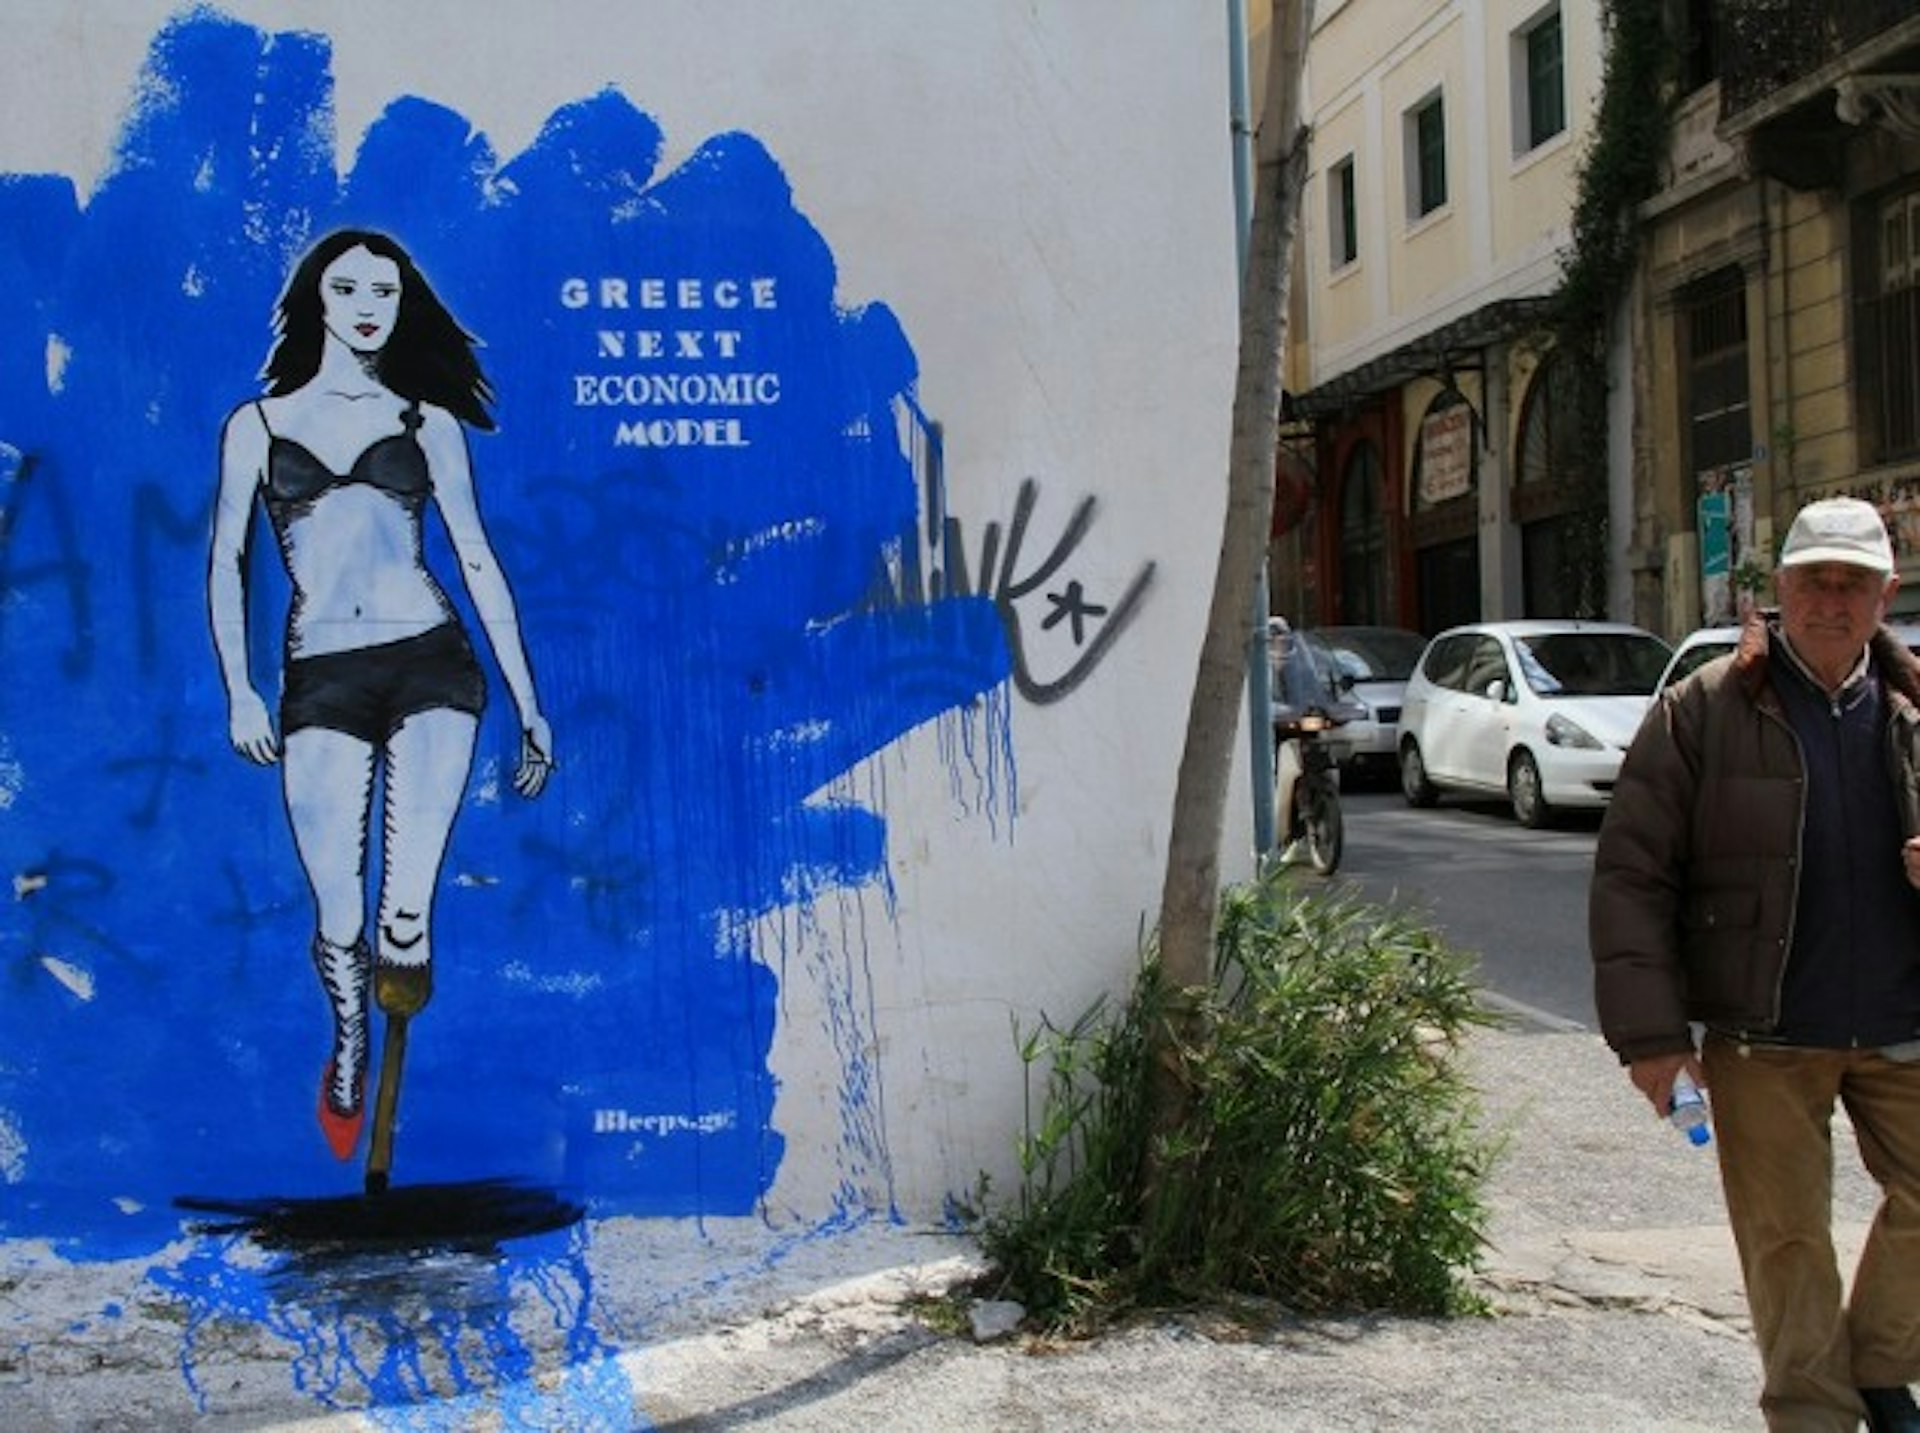 greece next economic model-2011